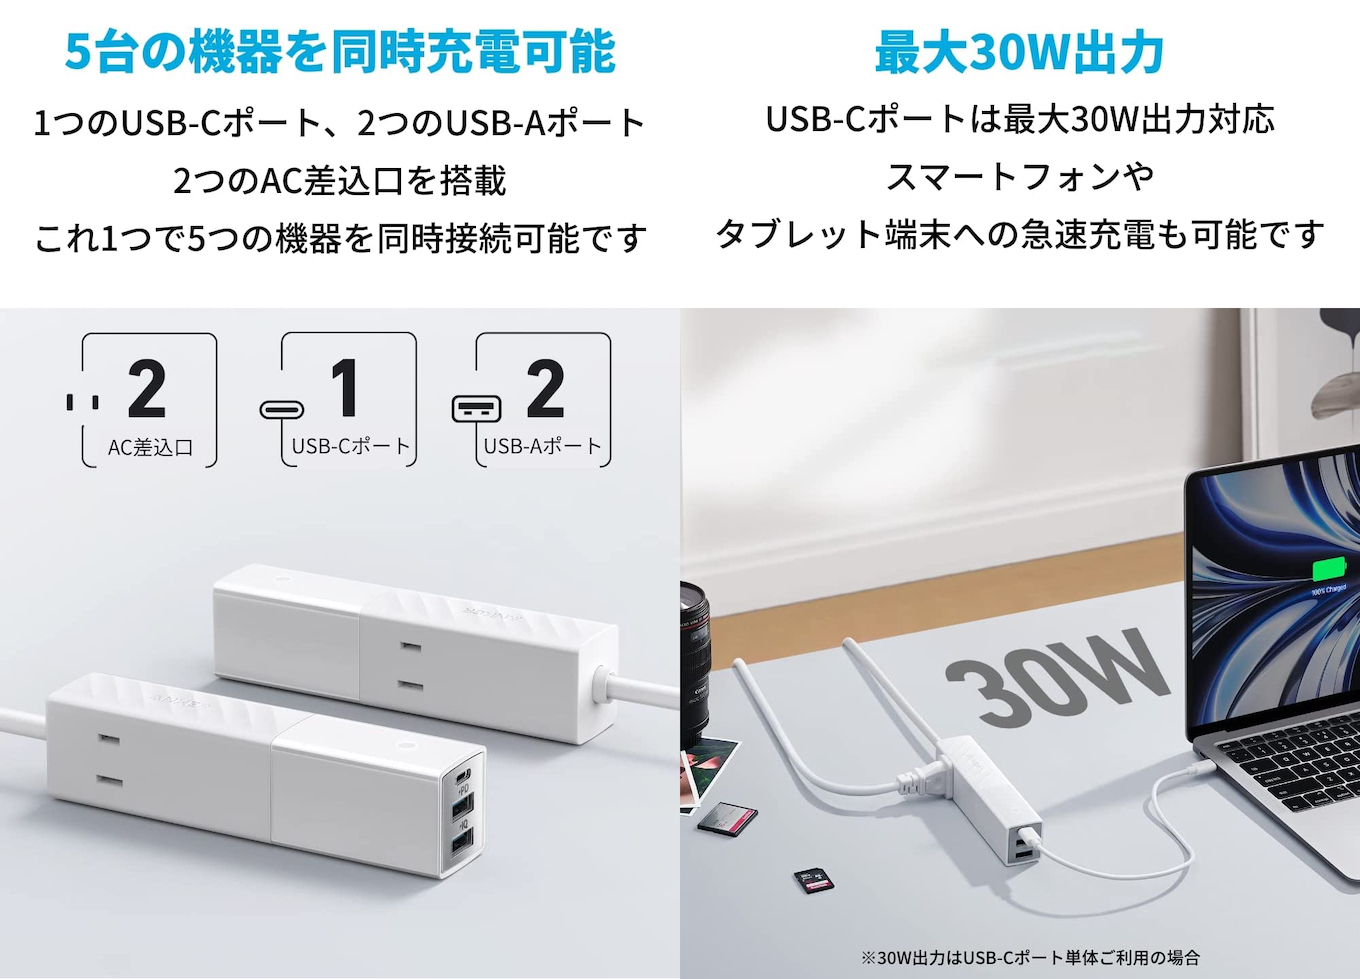 Anker 511 USB Power Strip